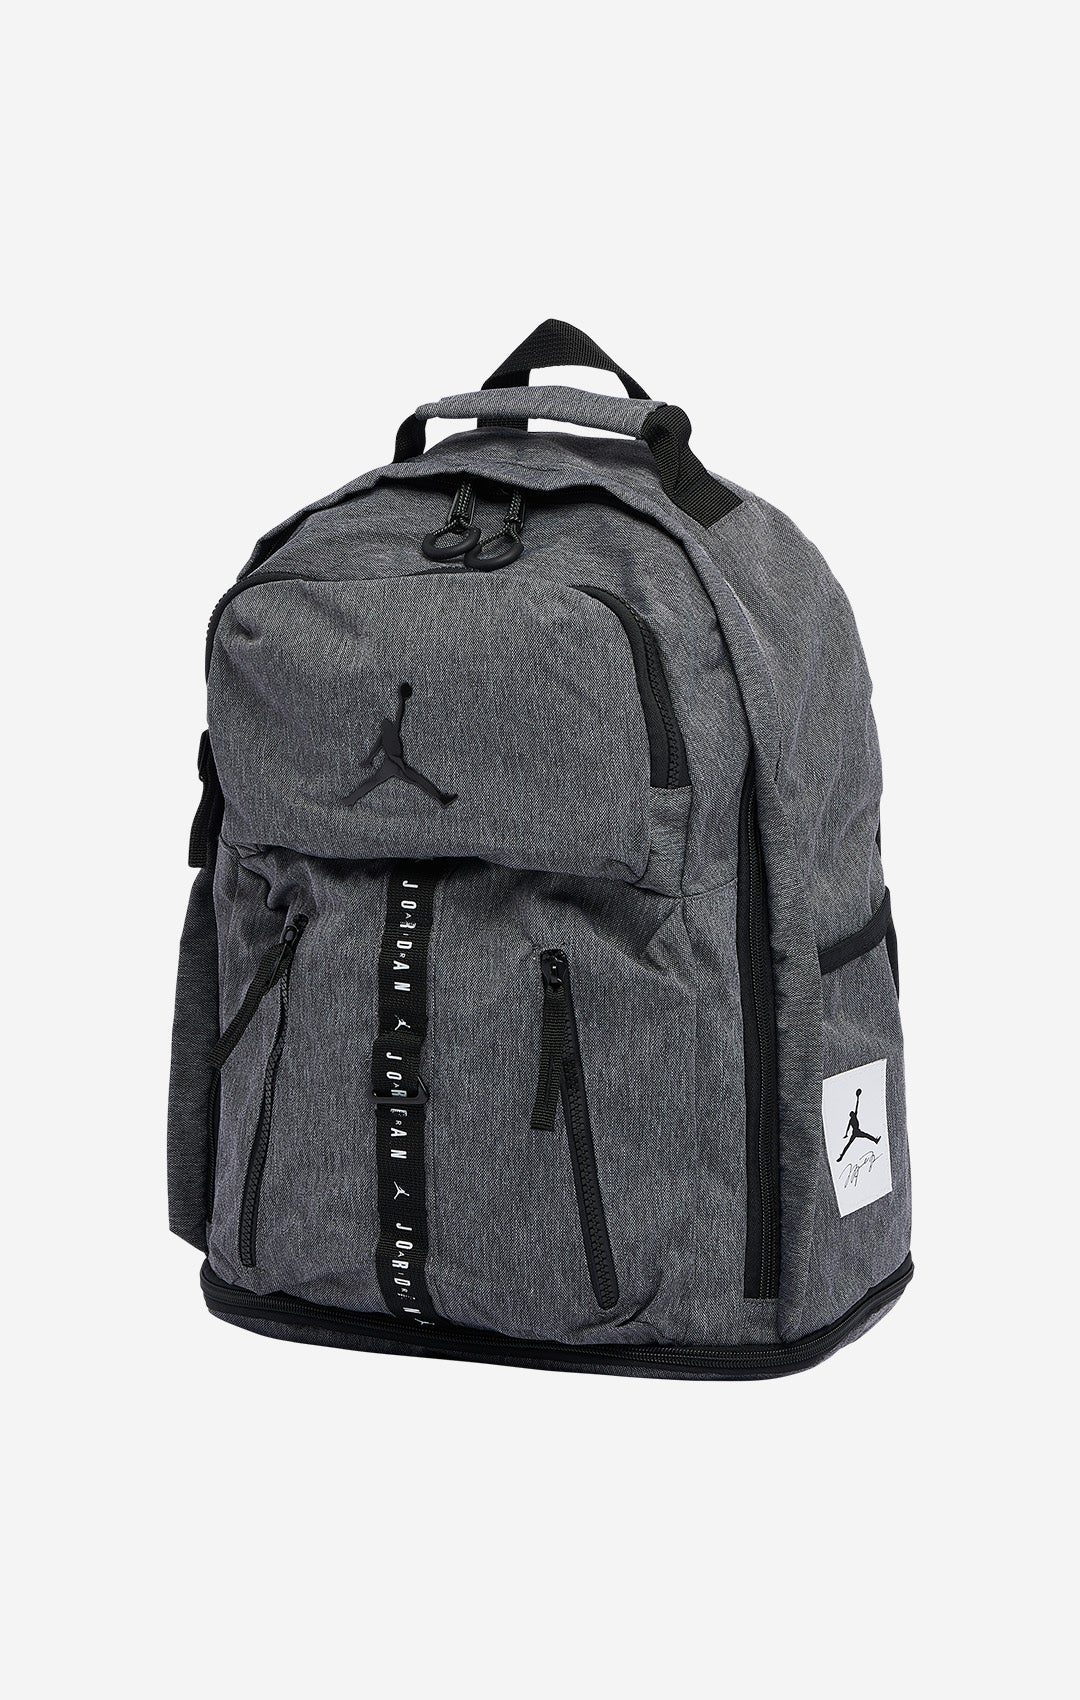 Backpacks | Champs Sports